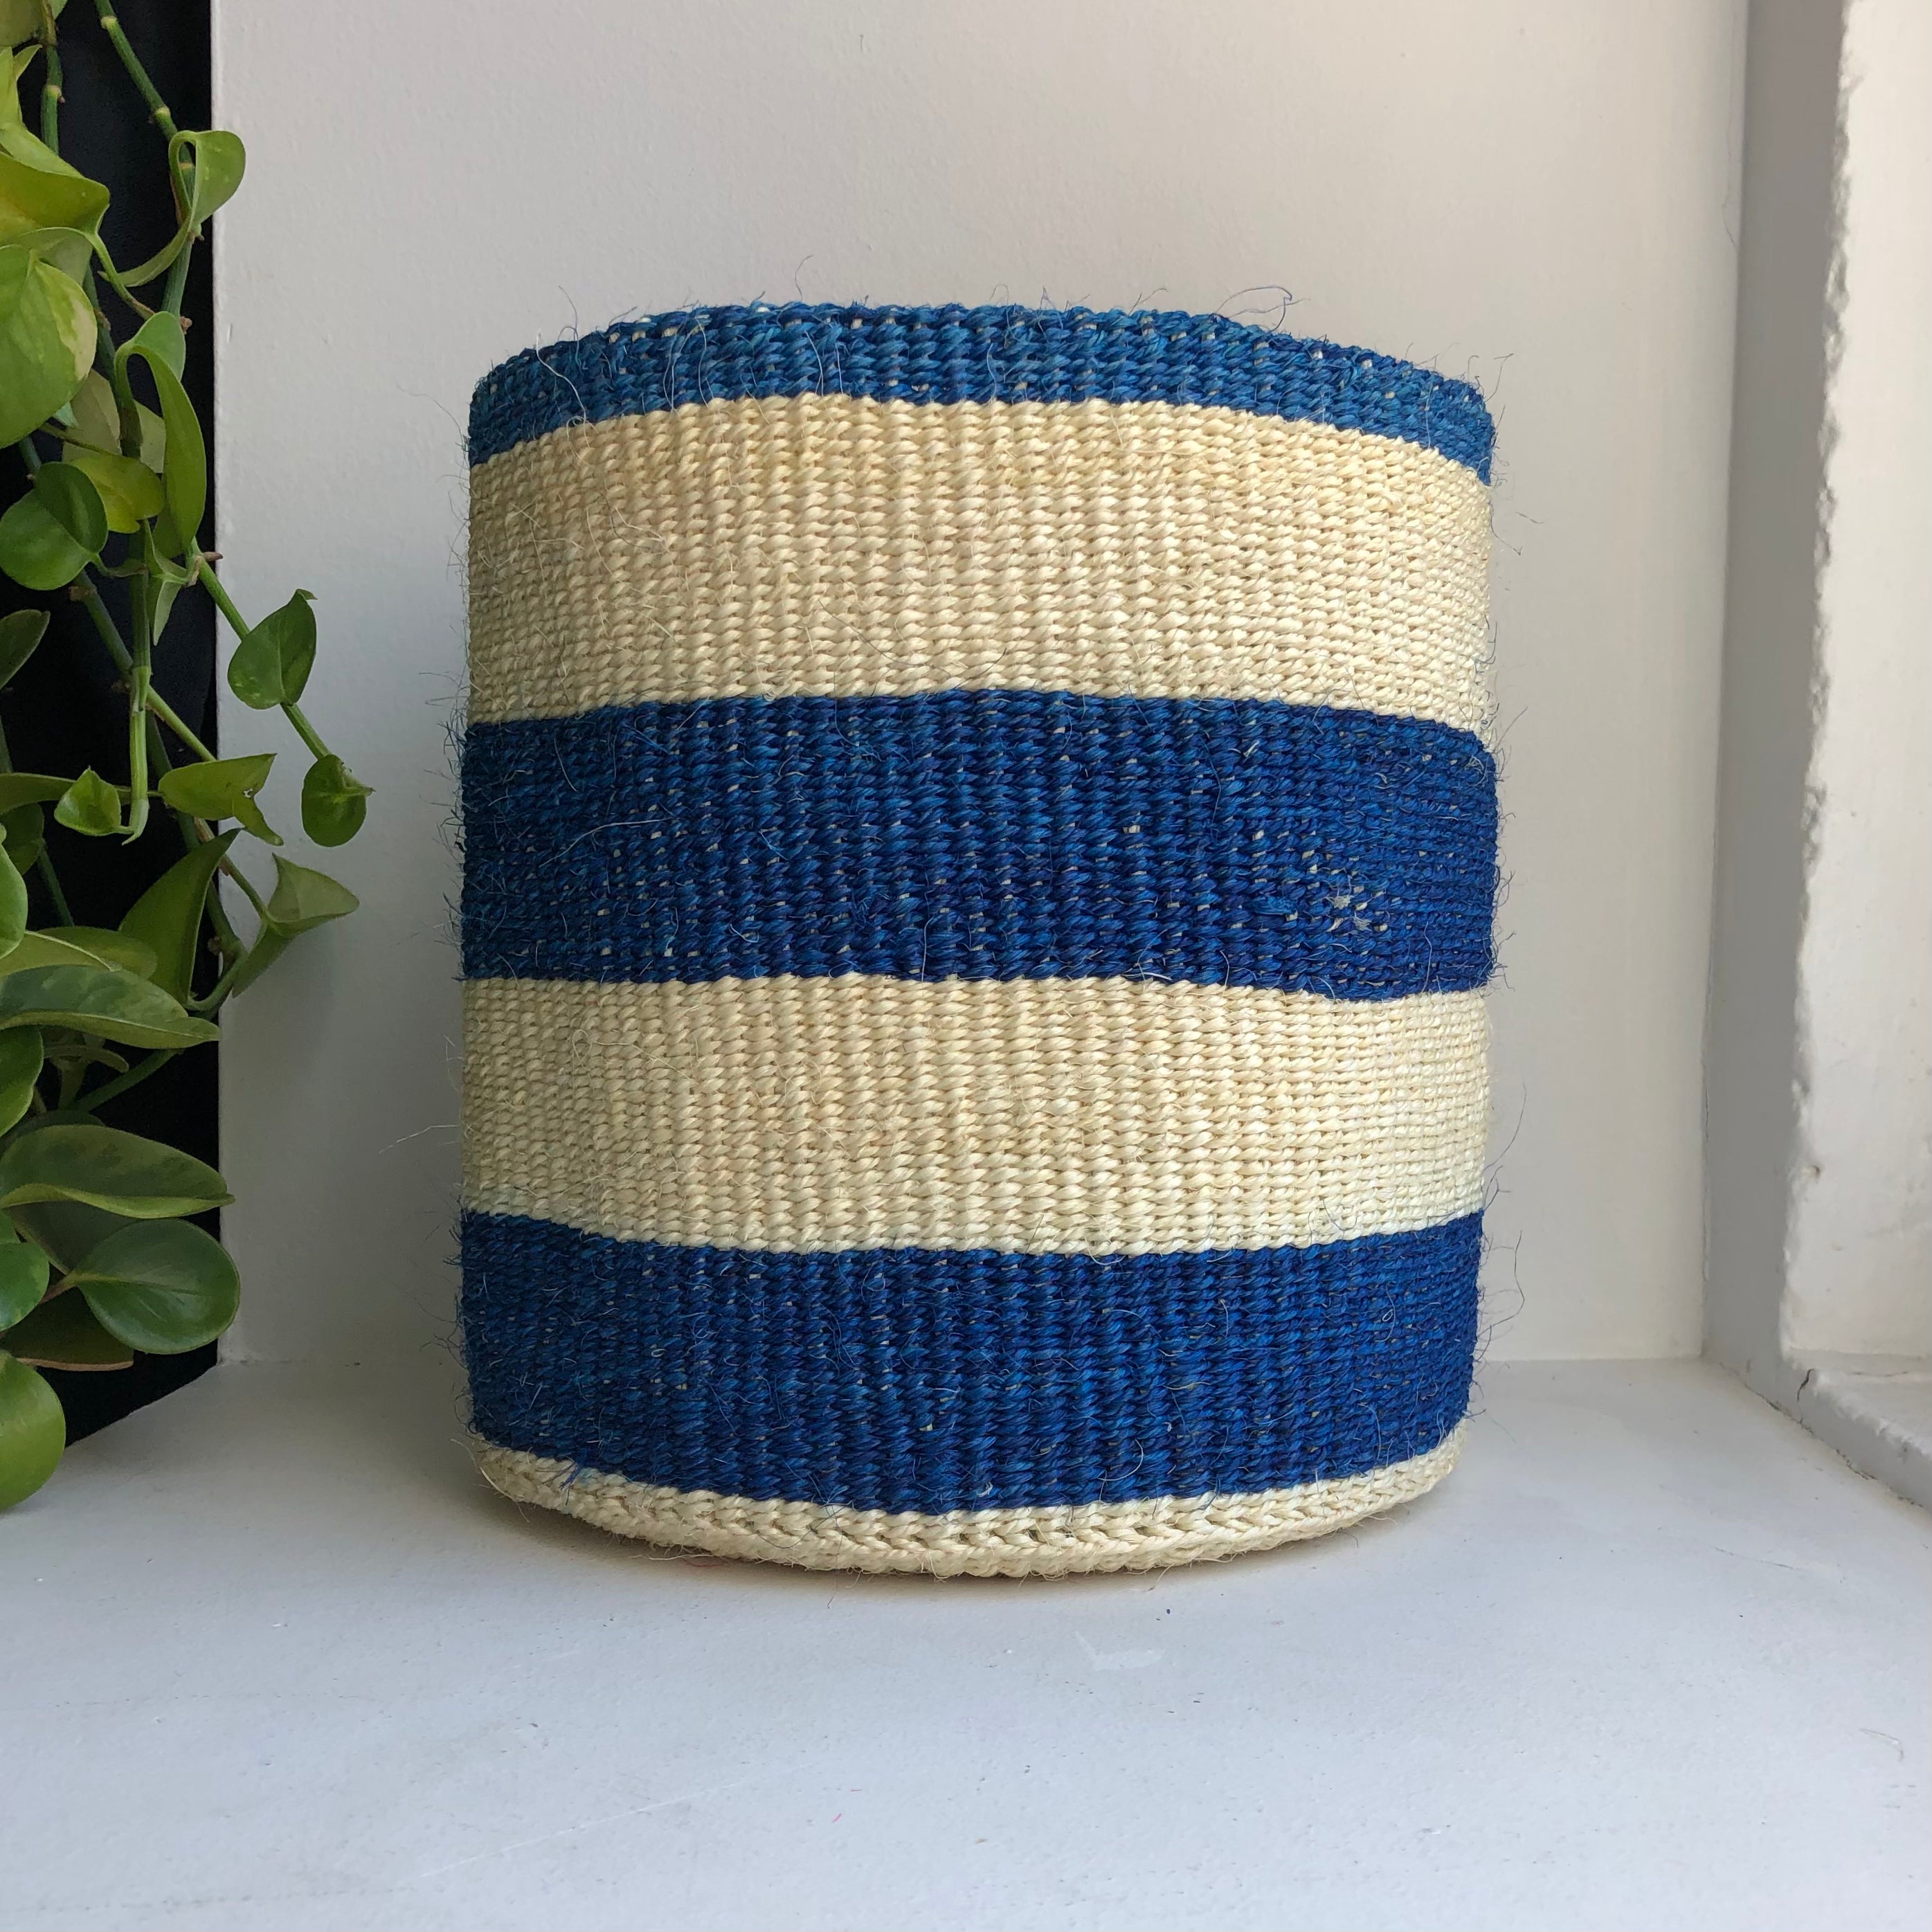 10" sisal basket with blue stripes